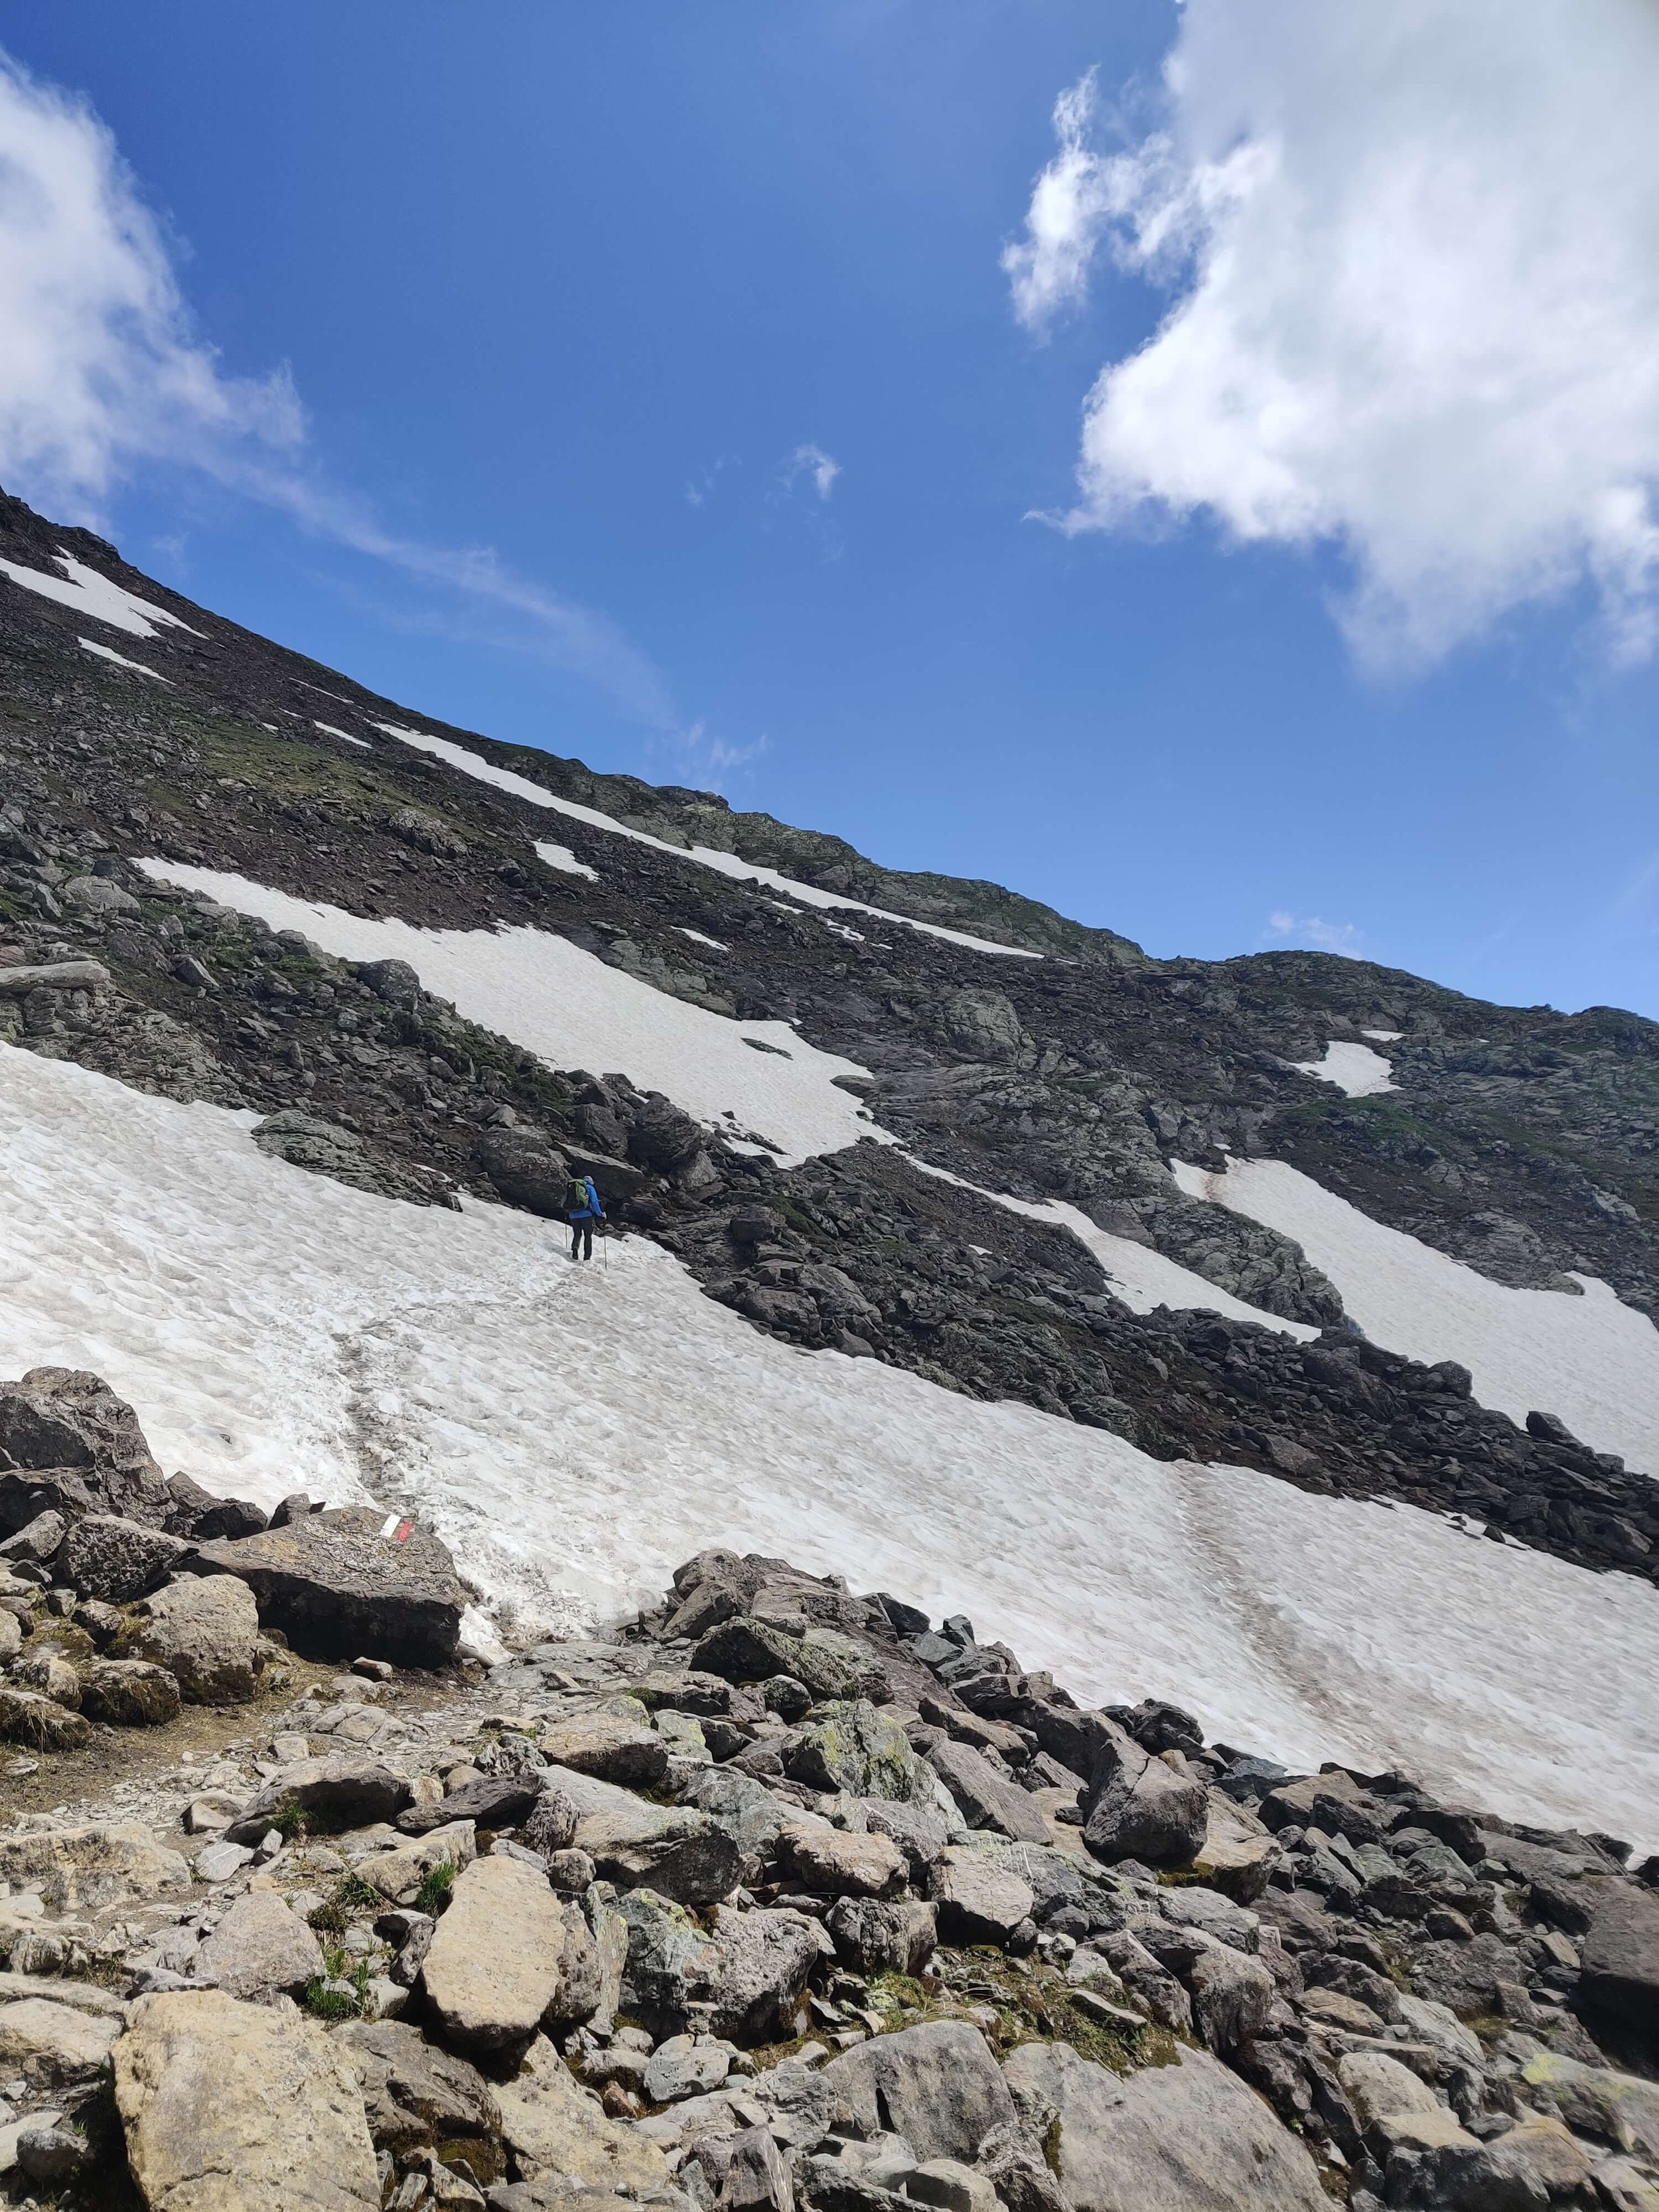 Comparison_snow on steep section between Col du Bonhomme and Col de la Croix_4 July 2020_resized.jpg